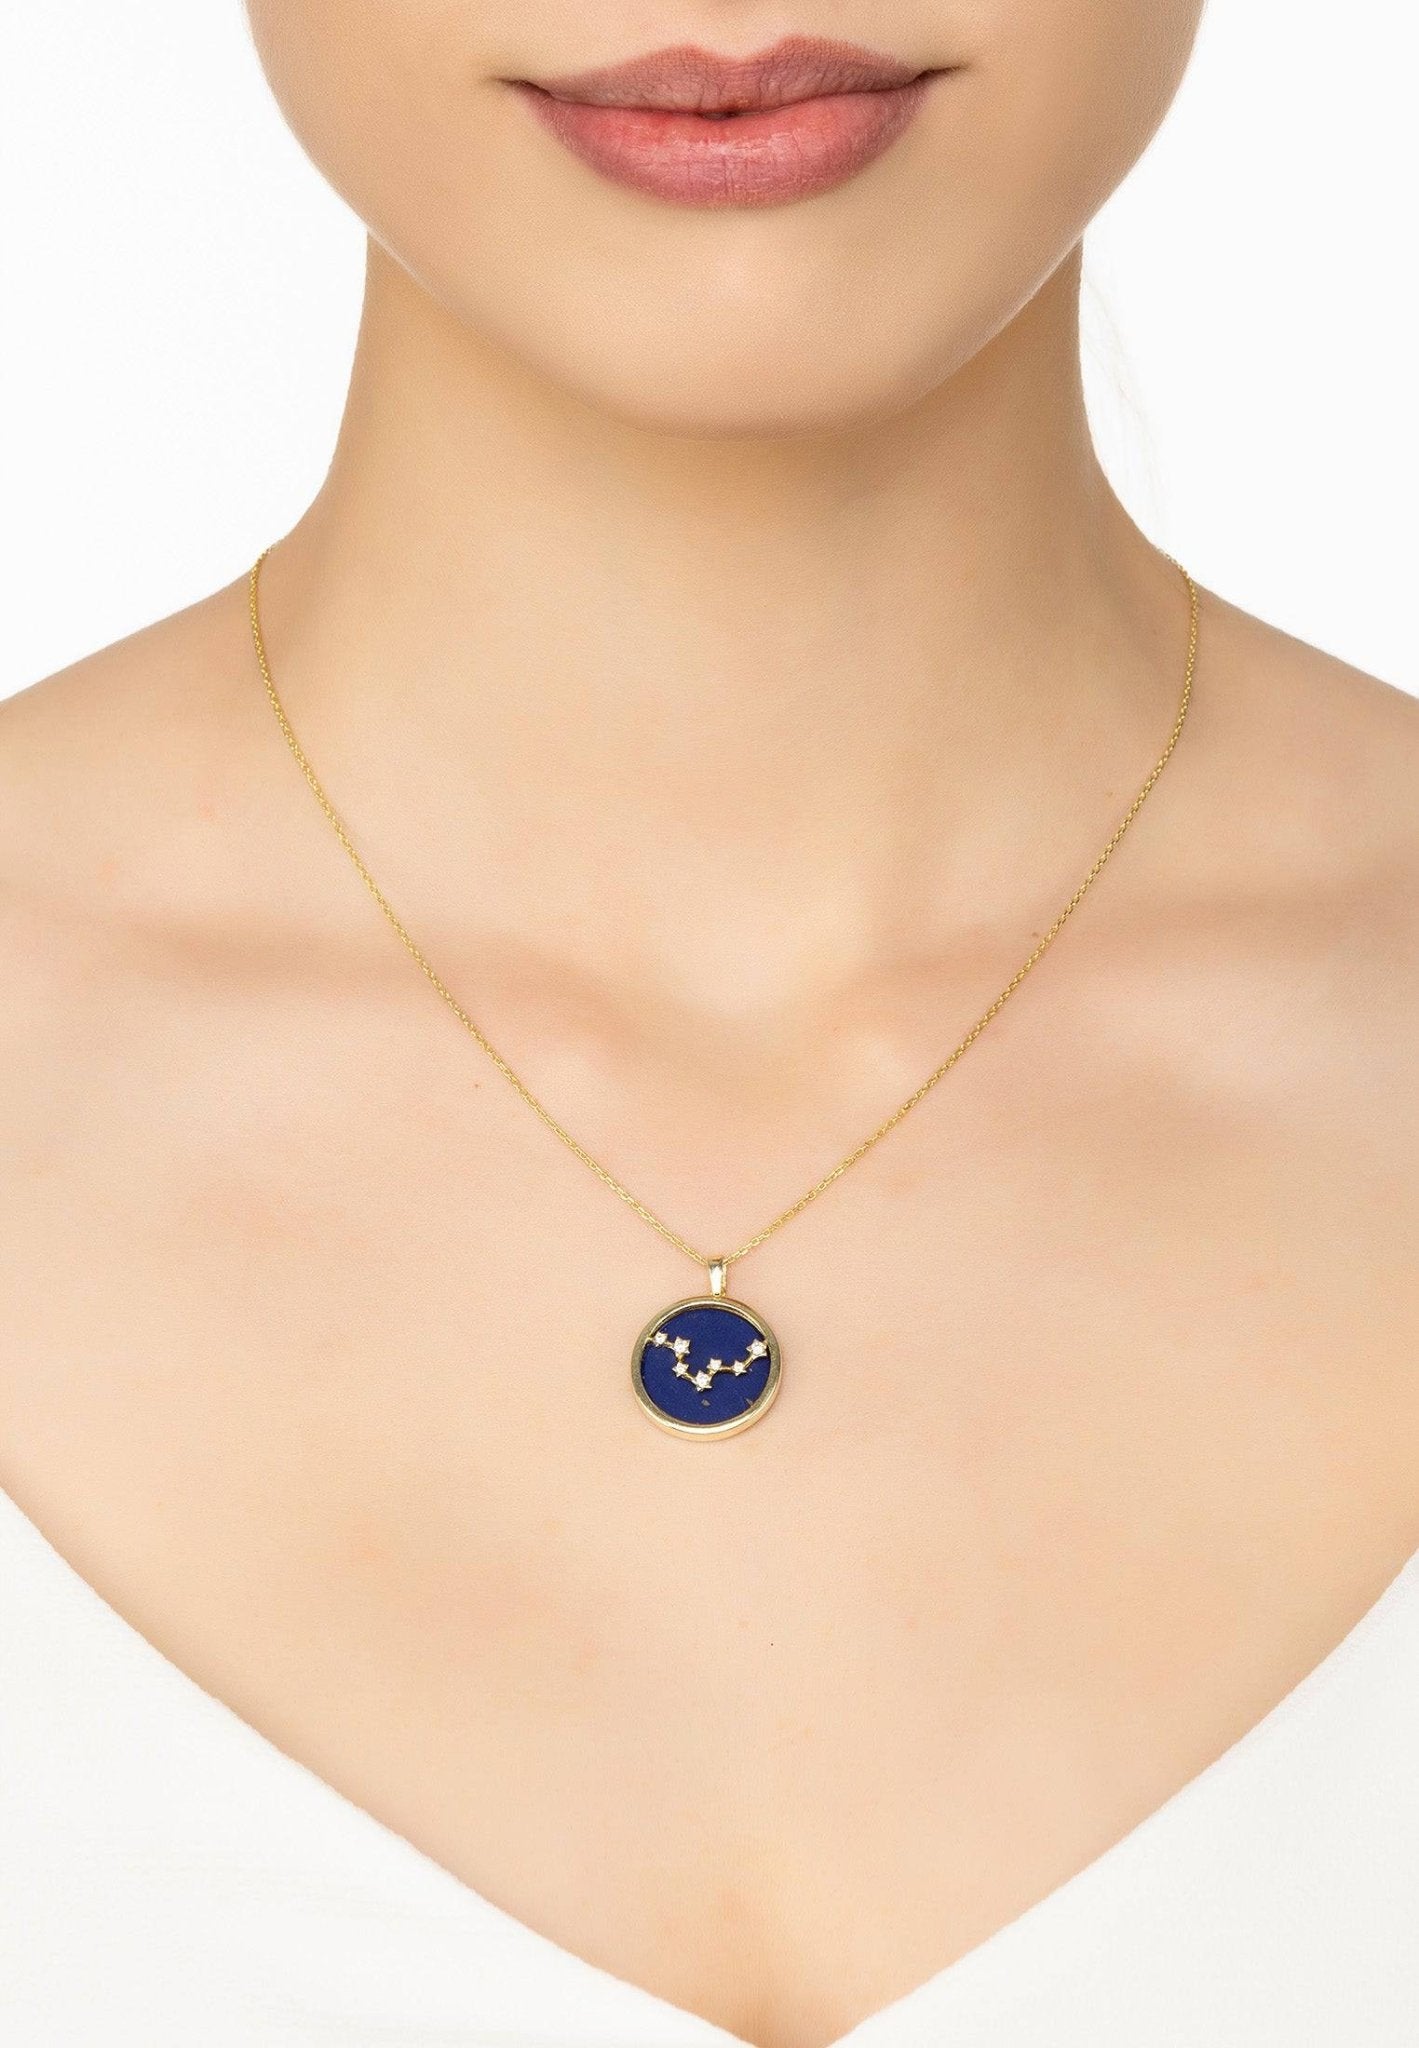 Personalized Necklaces - Zodiac Lapis Lazuli Star Constellation Pendant Necklace Gold Pisces 